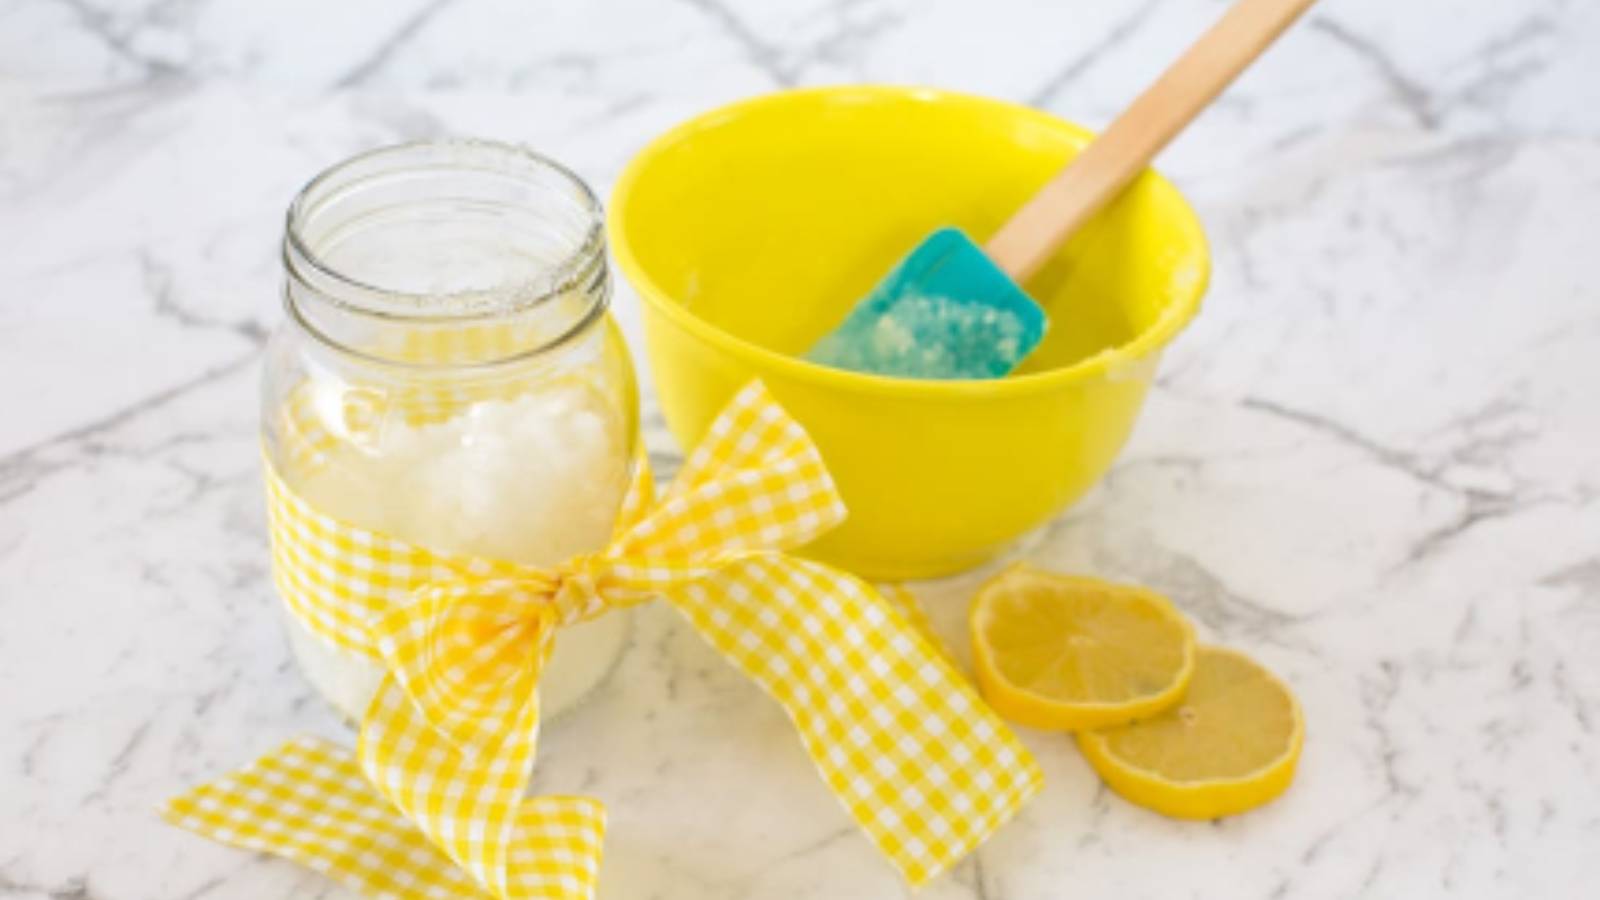 Homemade mint and lemon sugar scrub.